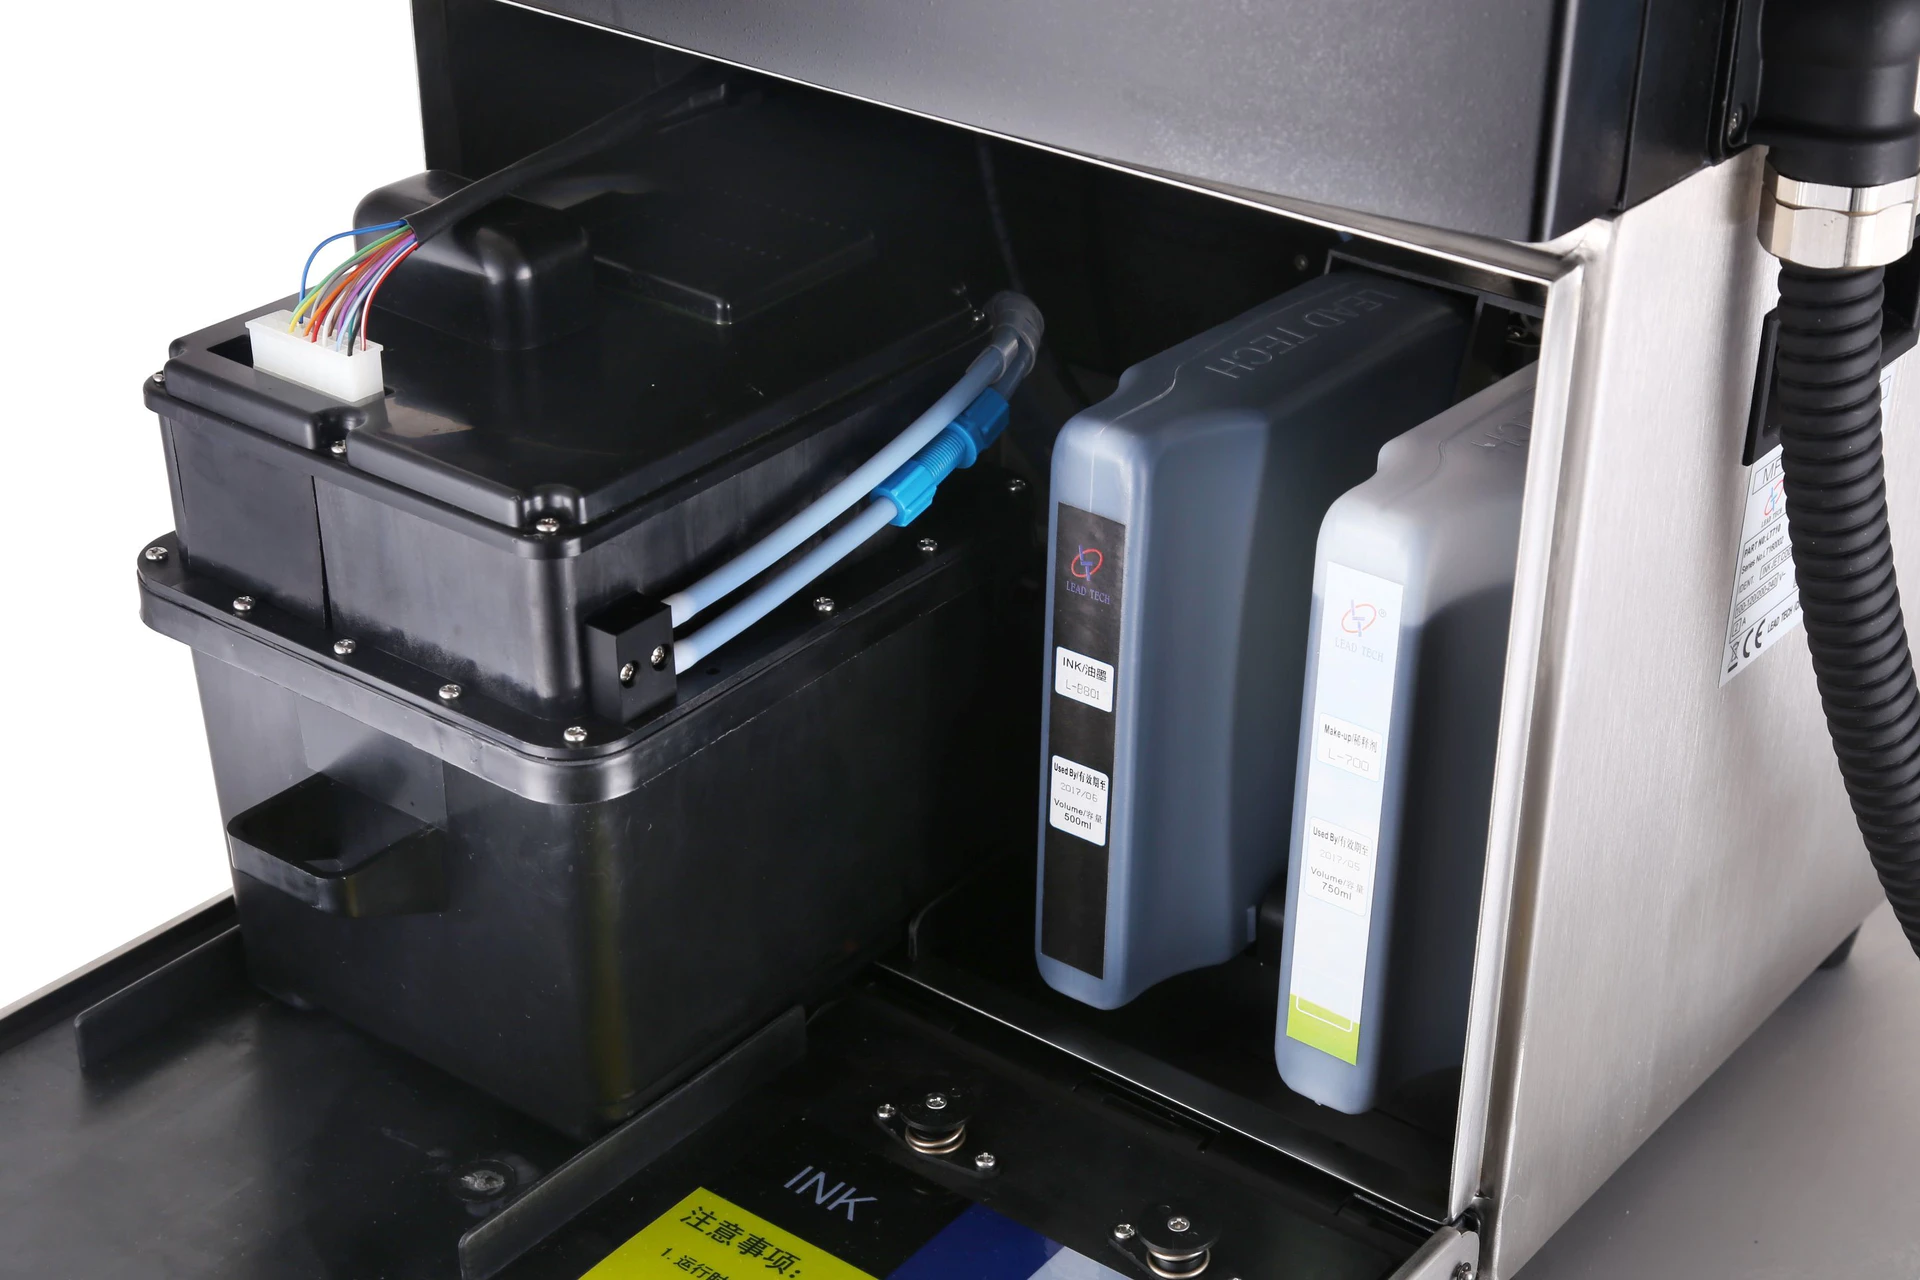 Lead Tech PE Pipe Coding Continuous Cij Inkjet Printer Lt760